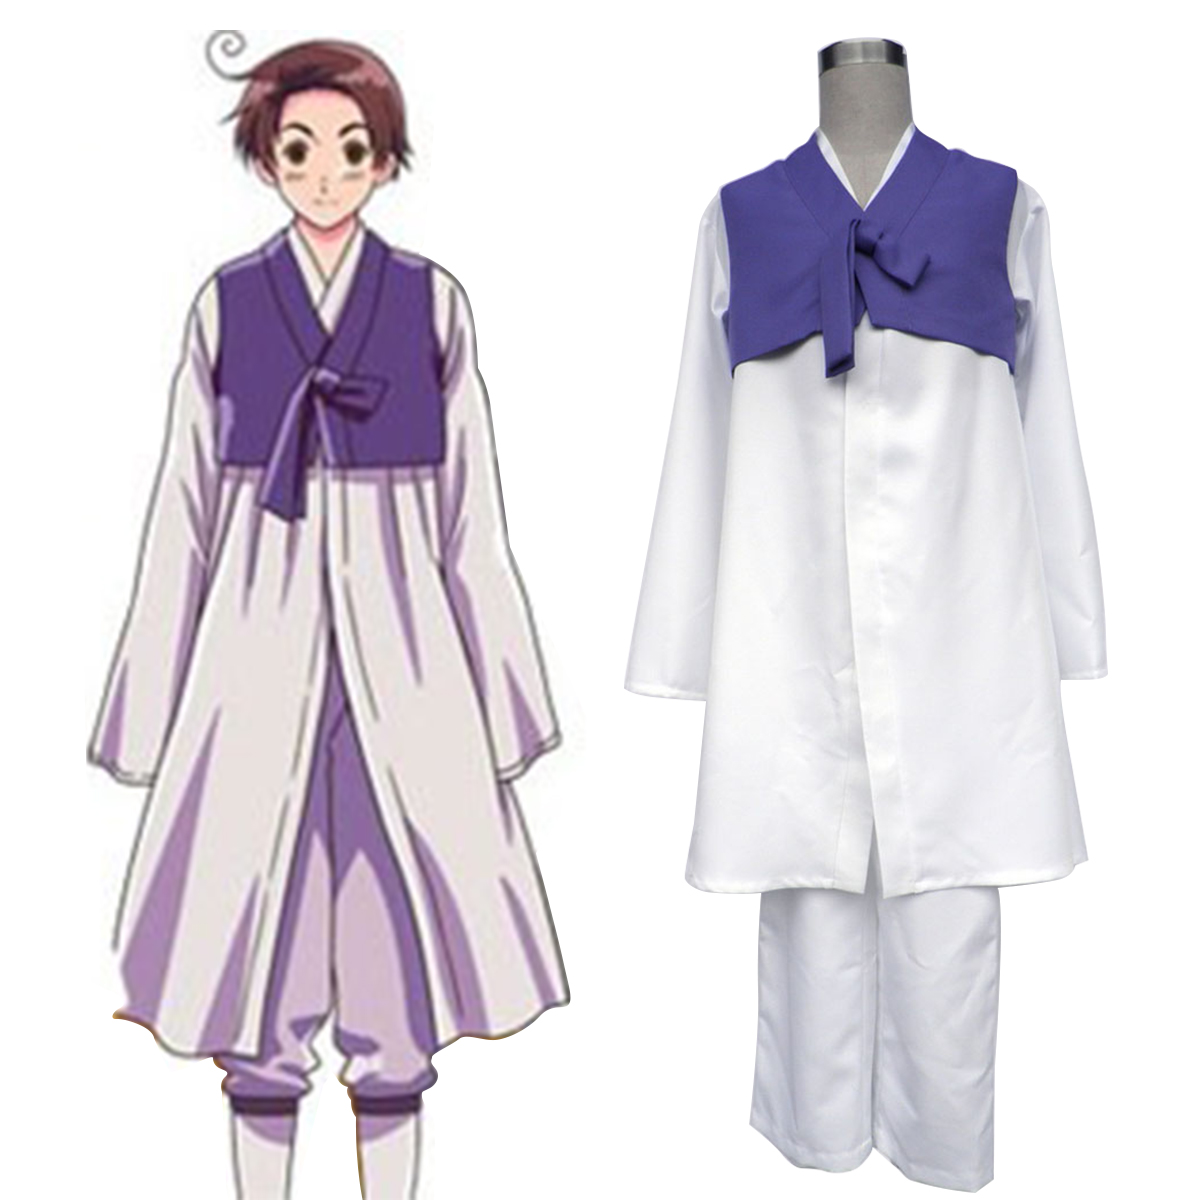 Axis Powers Hetalia South Korea 1 Anime Cosplay Costumes Outfit